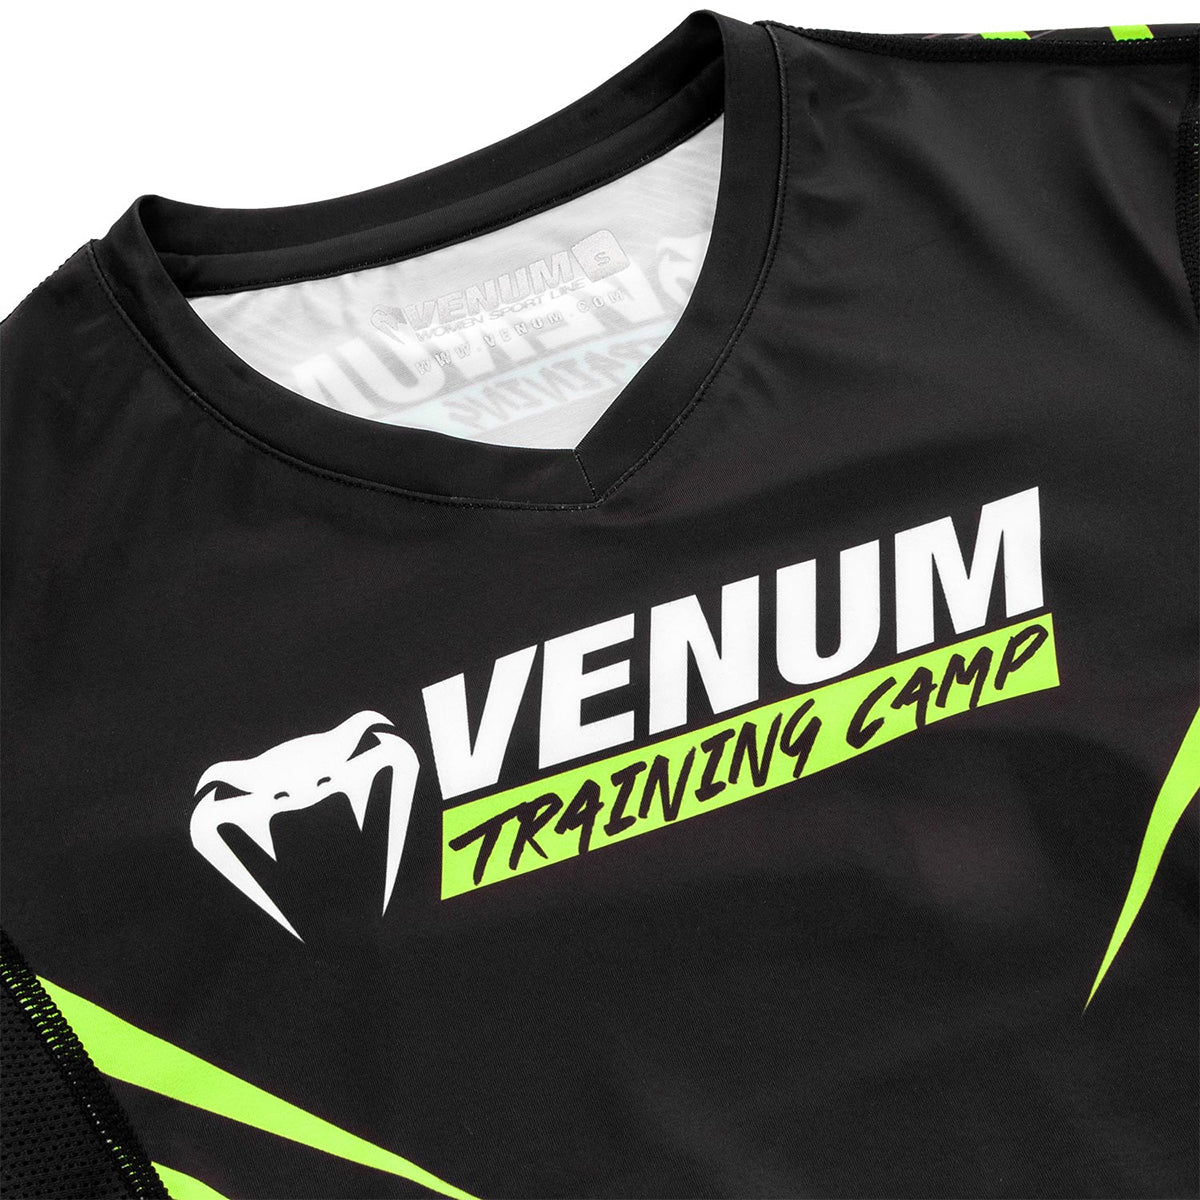 Venum Women's Training Camp 2.0 Short Sleeve Rashguard - Black/Neon Yellow Venum